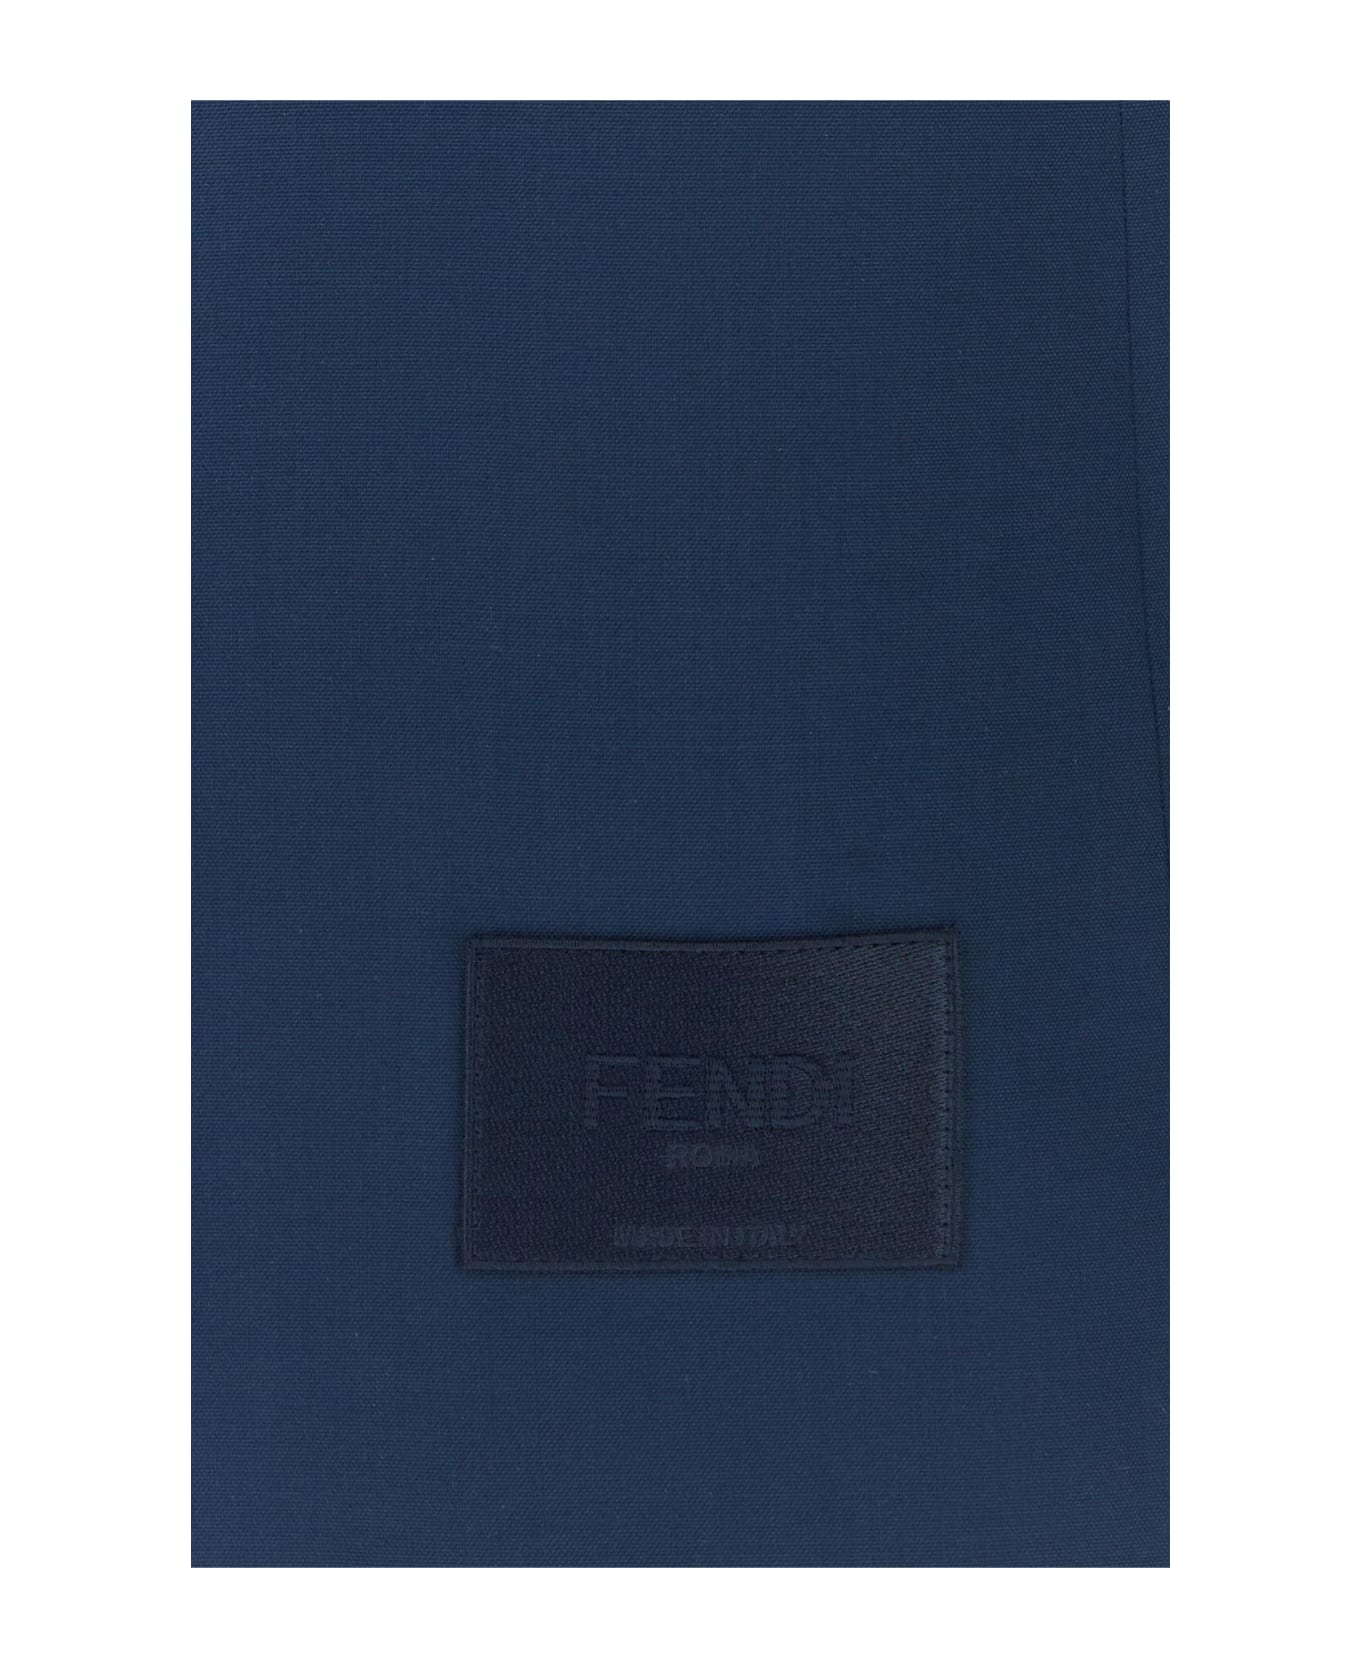 Fendi Blue Wool Blend Blazer - NAVY ブレザー